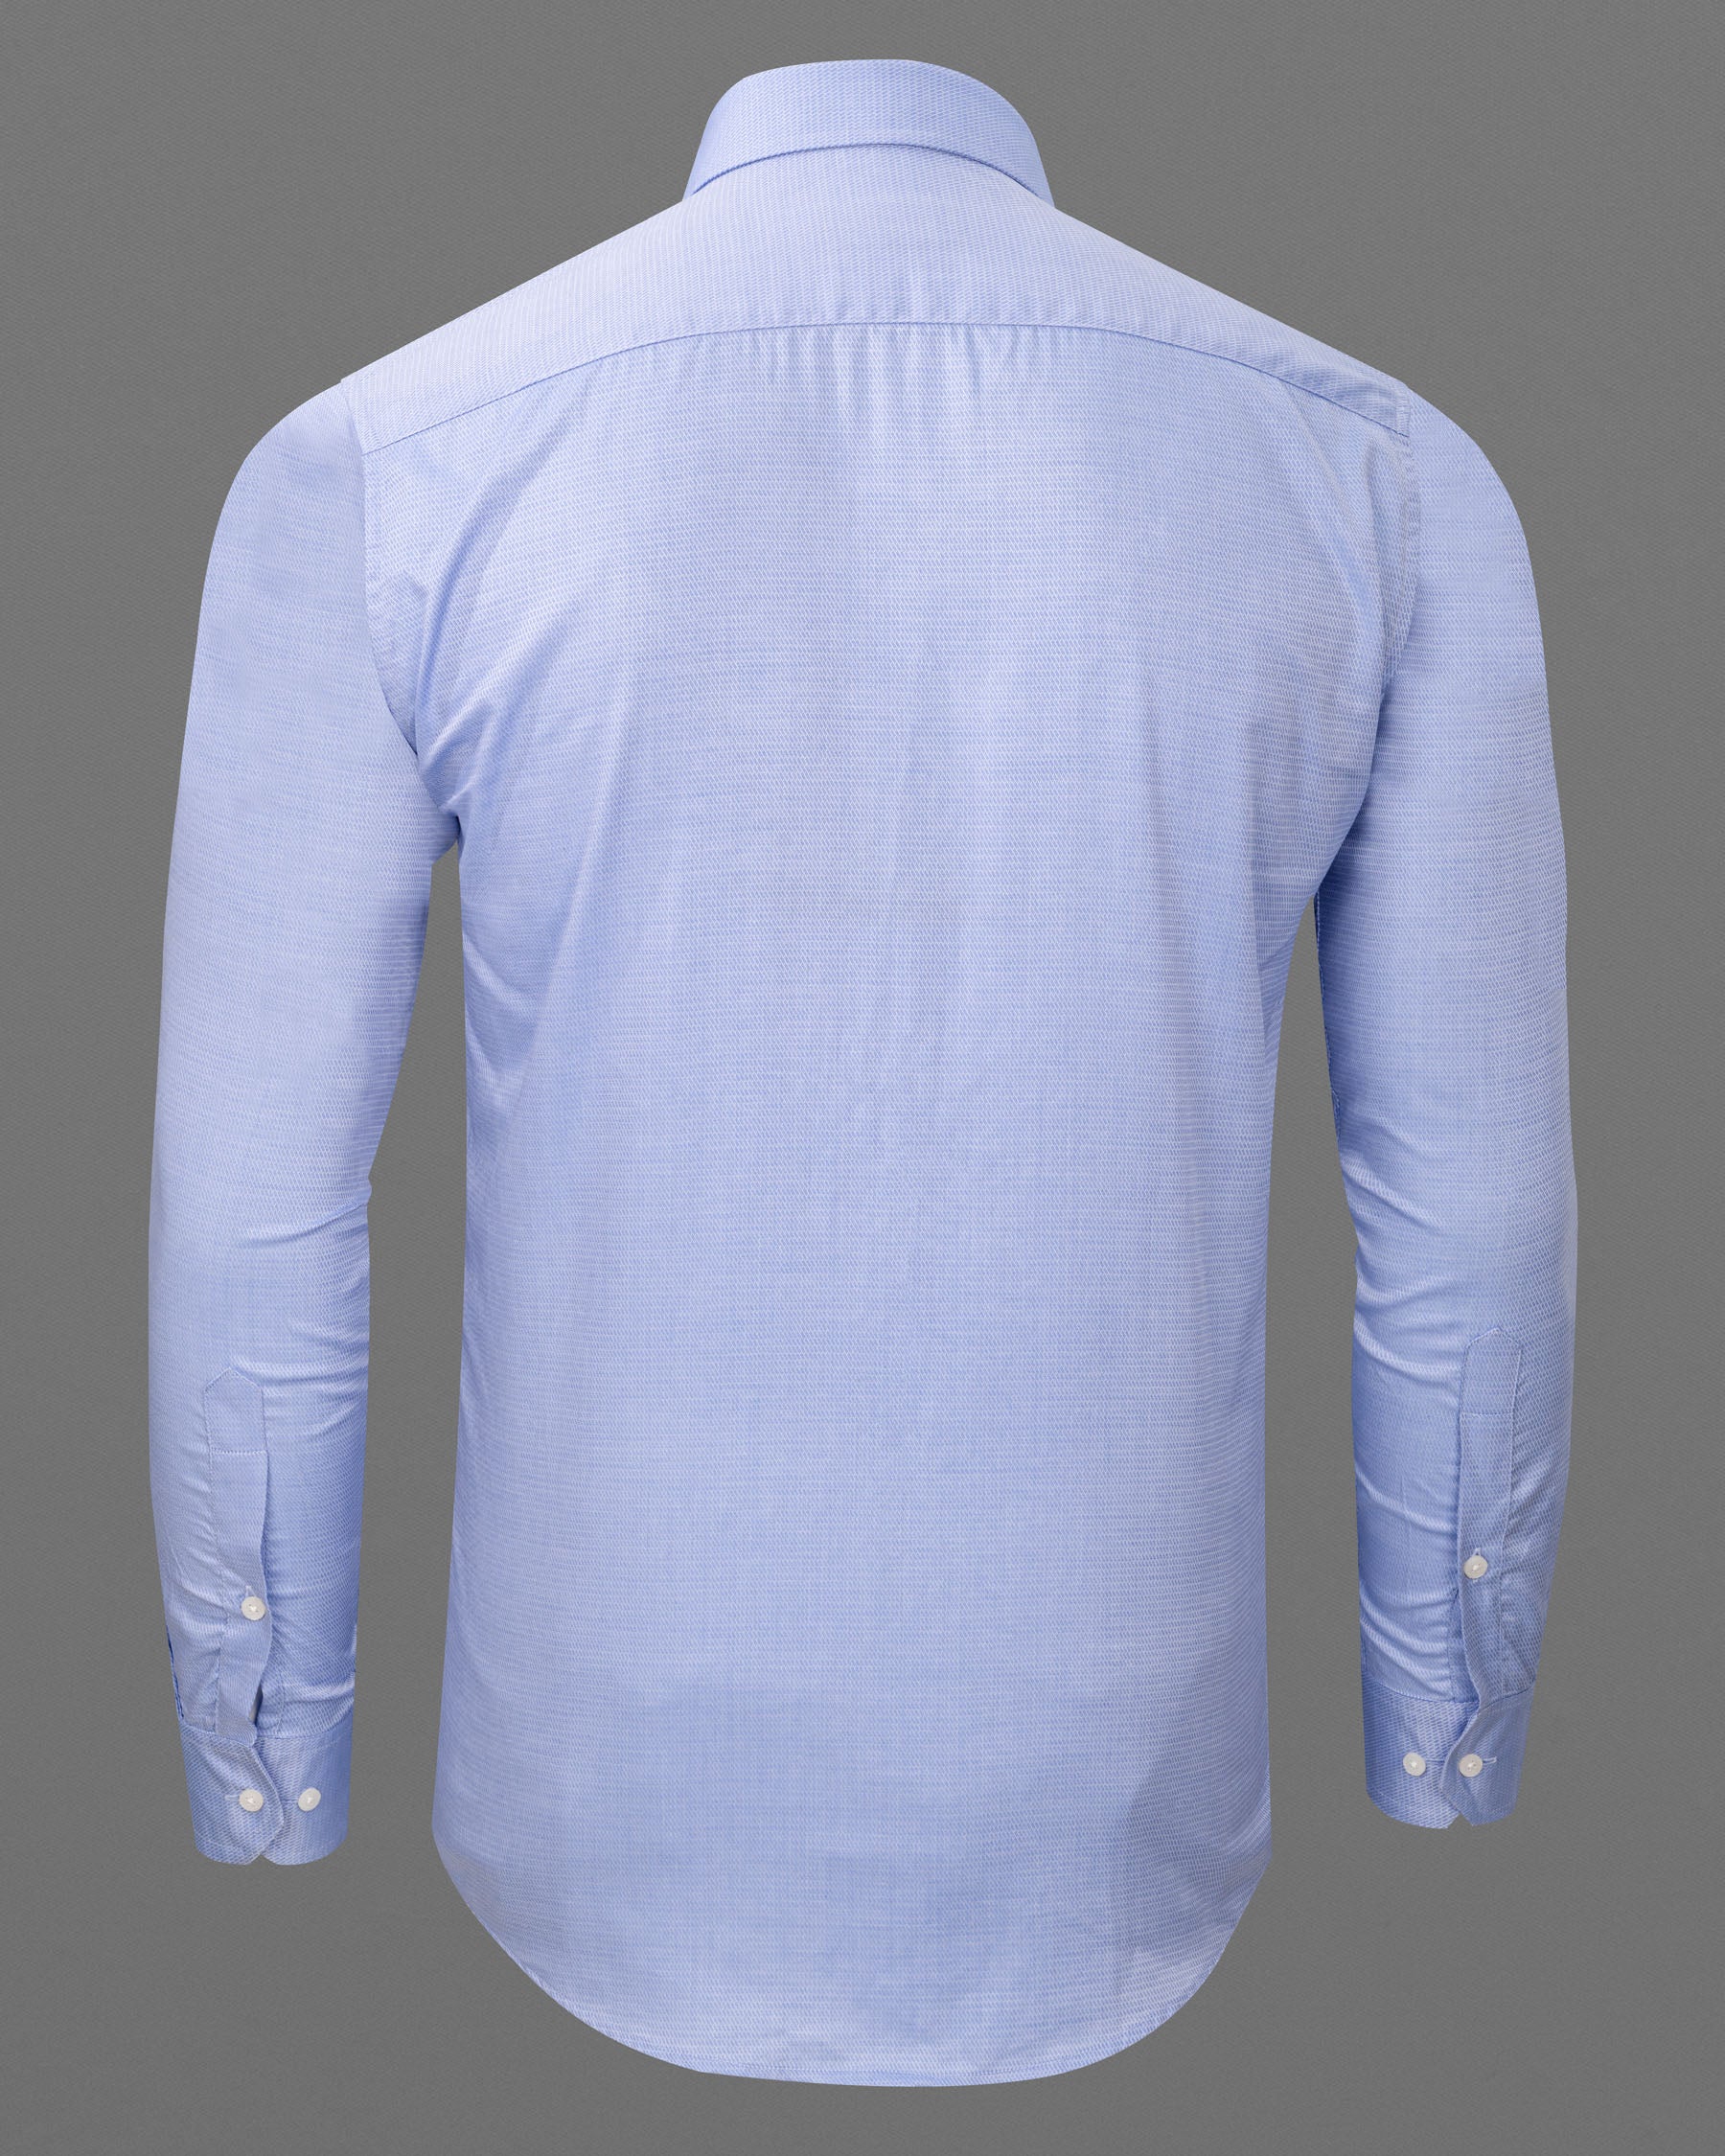 Periwinkle Blue Dobby Textured Premium Giza Cotton Shirt 6372-CLOTH-P-38,6372-CLOTH-P-H-38,6372-CLOTH-P-39,6372-CLOTH-P-H-39,6372-CLOTH-P-40,6372-CLOTH-P-H-40,6372-CLOTH-P-42,6372-CLOTH-P-H-42,6372-CLOTH-P-44,6372-CLOTH-P-H-44,6372-CLOTH-P-46,6372-CLOTH-P-H-46,6372-CLOTH-P-48,6372-CLOTH-P-H-48,6372-CLOTH-P-50,6372-CLOTH-P-H-50,6372-CLOTH-P-52,6372-CLOTH-P-H-52